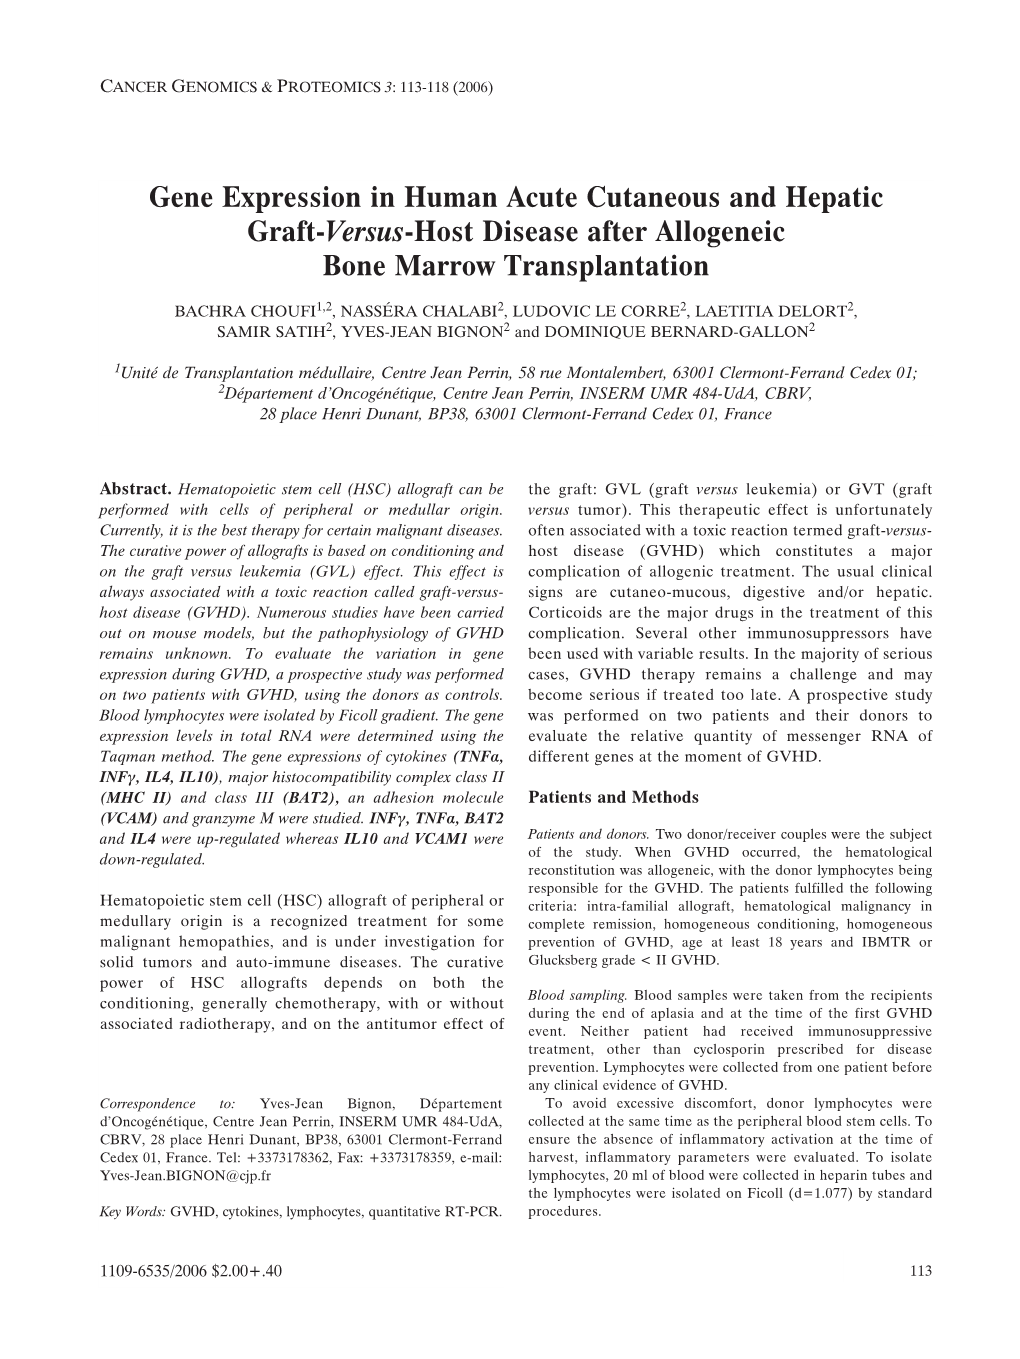 Gene Expression in Human Acute Cutaneous and Hepatic Graft-Versus-Host Disease After Allogeneic Bone Marrow Transplantation